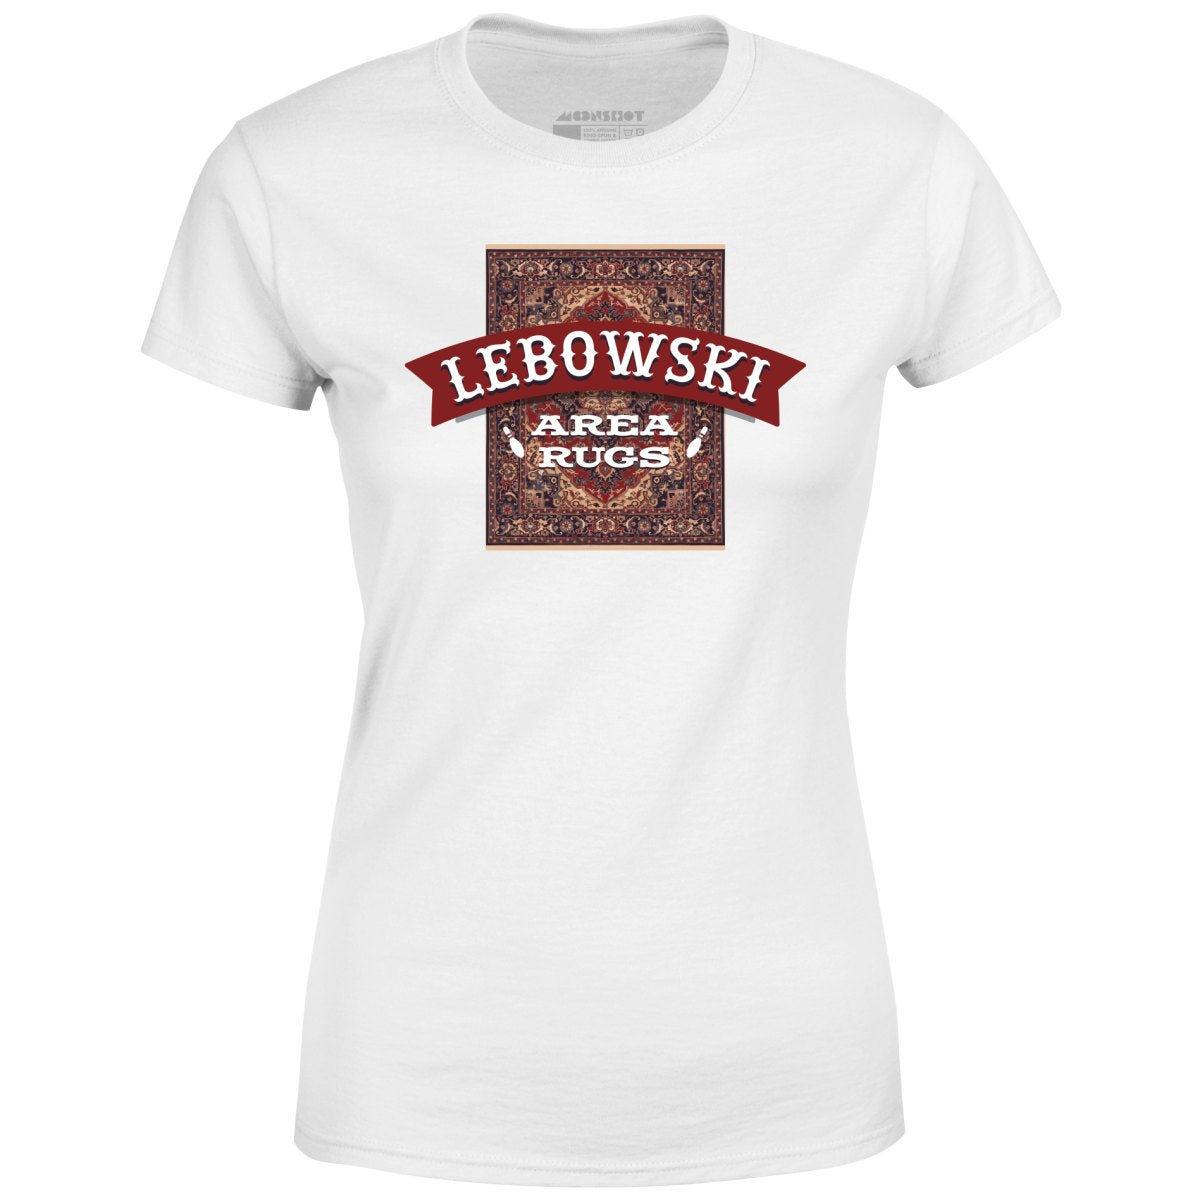 Lebowski Area Rugs - Women's T-Shirt